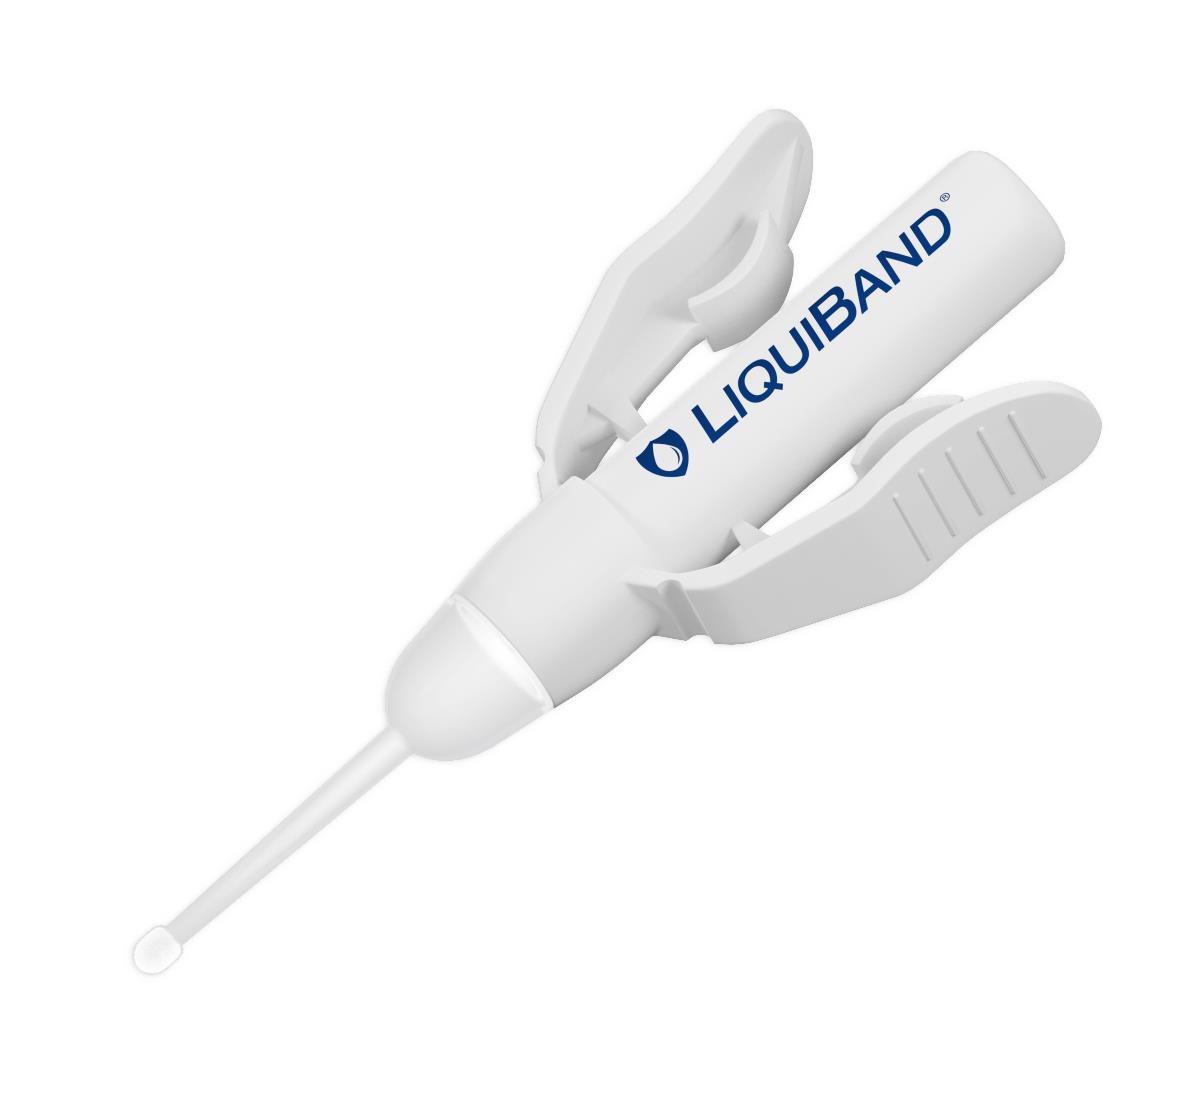 LIQUIBAND Topical Skin Adhesive Liquid Stitches & Skin Glue 0.5 Gram